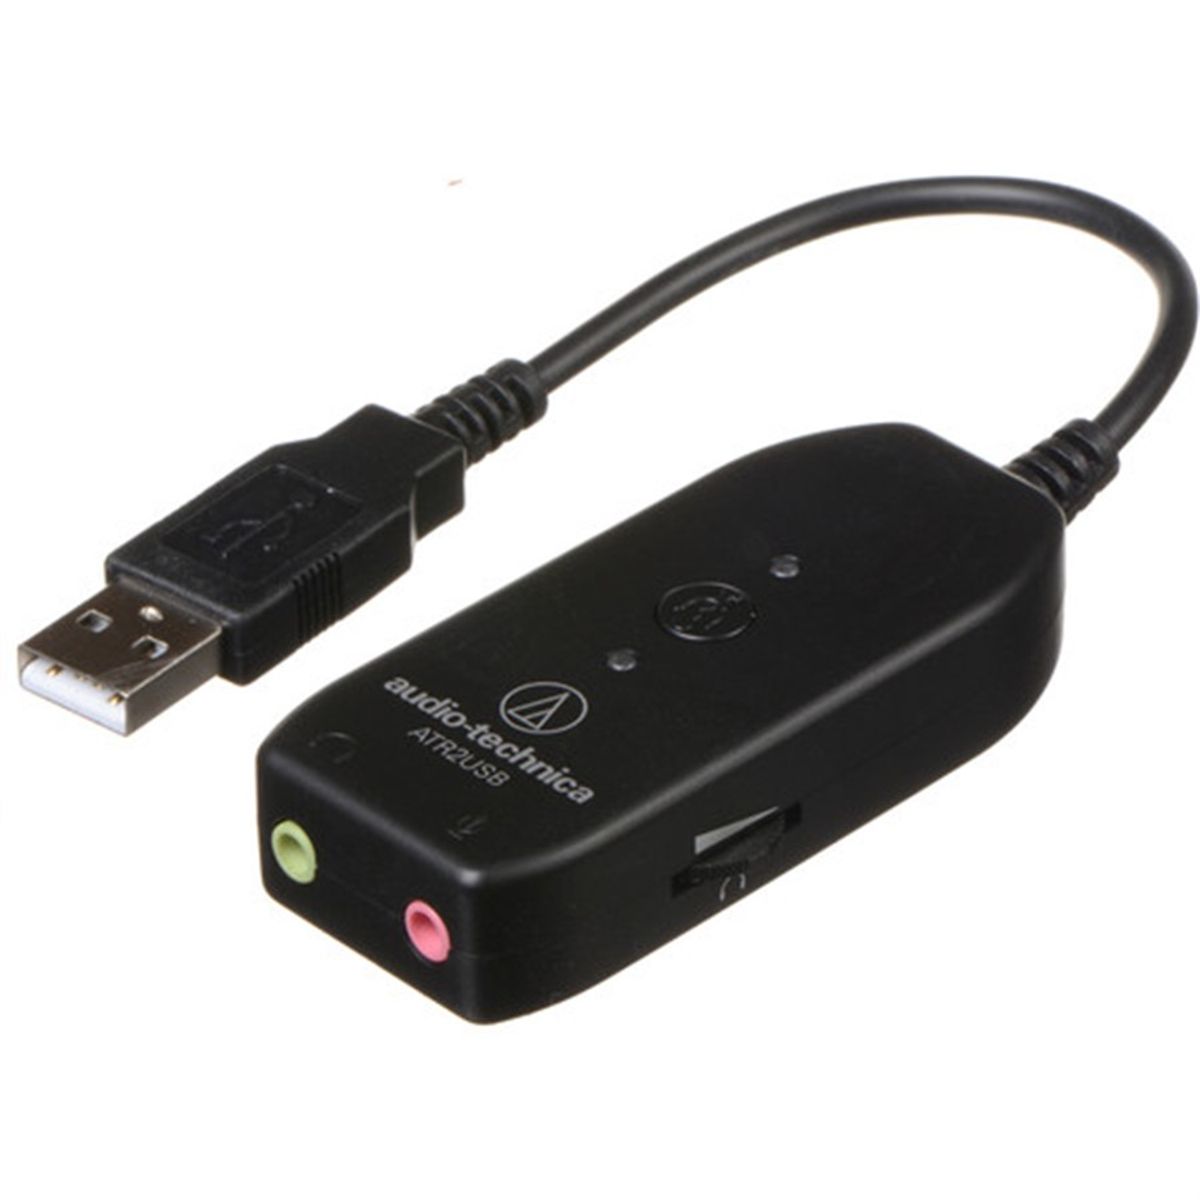 Usb audio out. USB2.0 Audio + USB адаптер 5.5. USB 3.0 на 3.5 Jack. Defender Audio USB. Переходник Джек юсб 3.0.